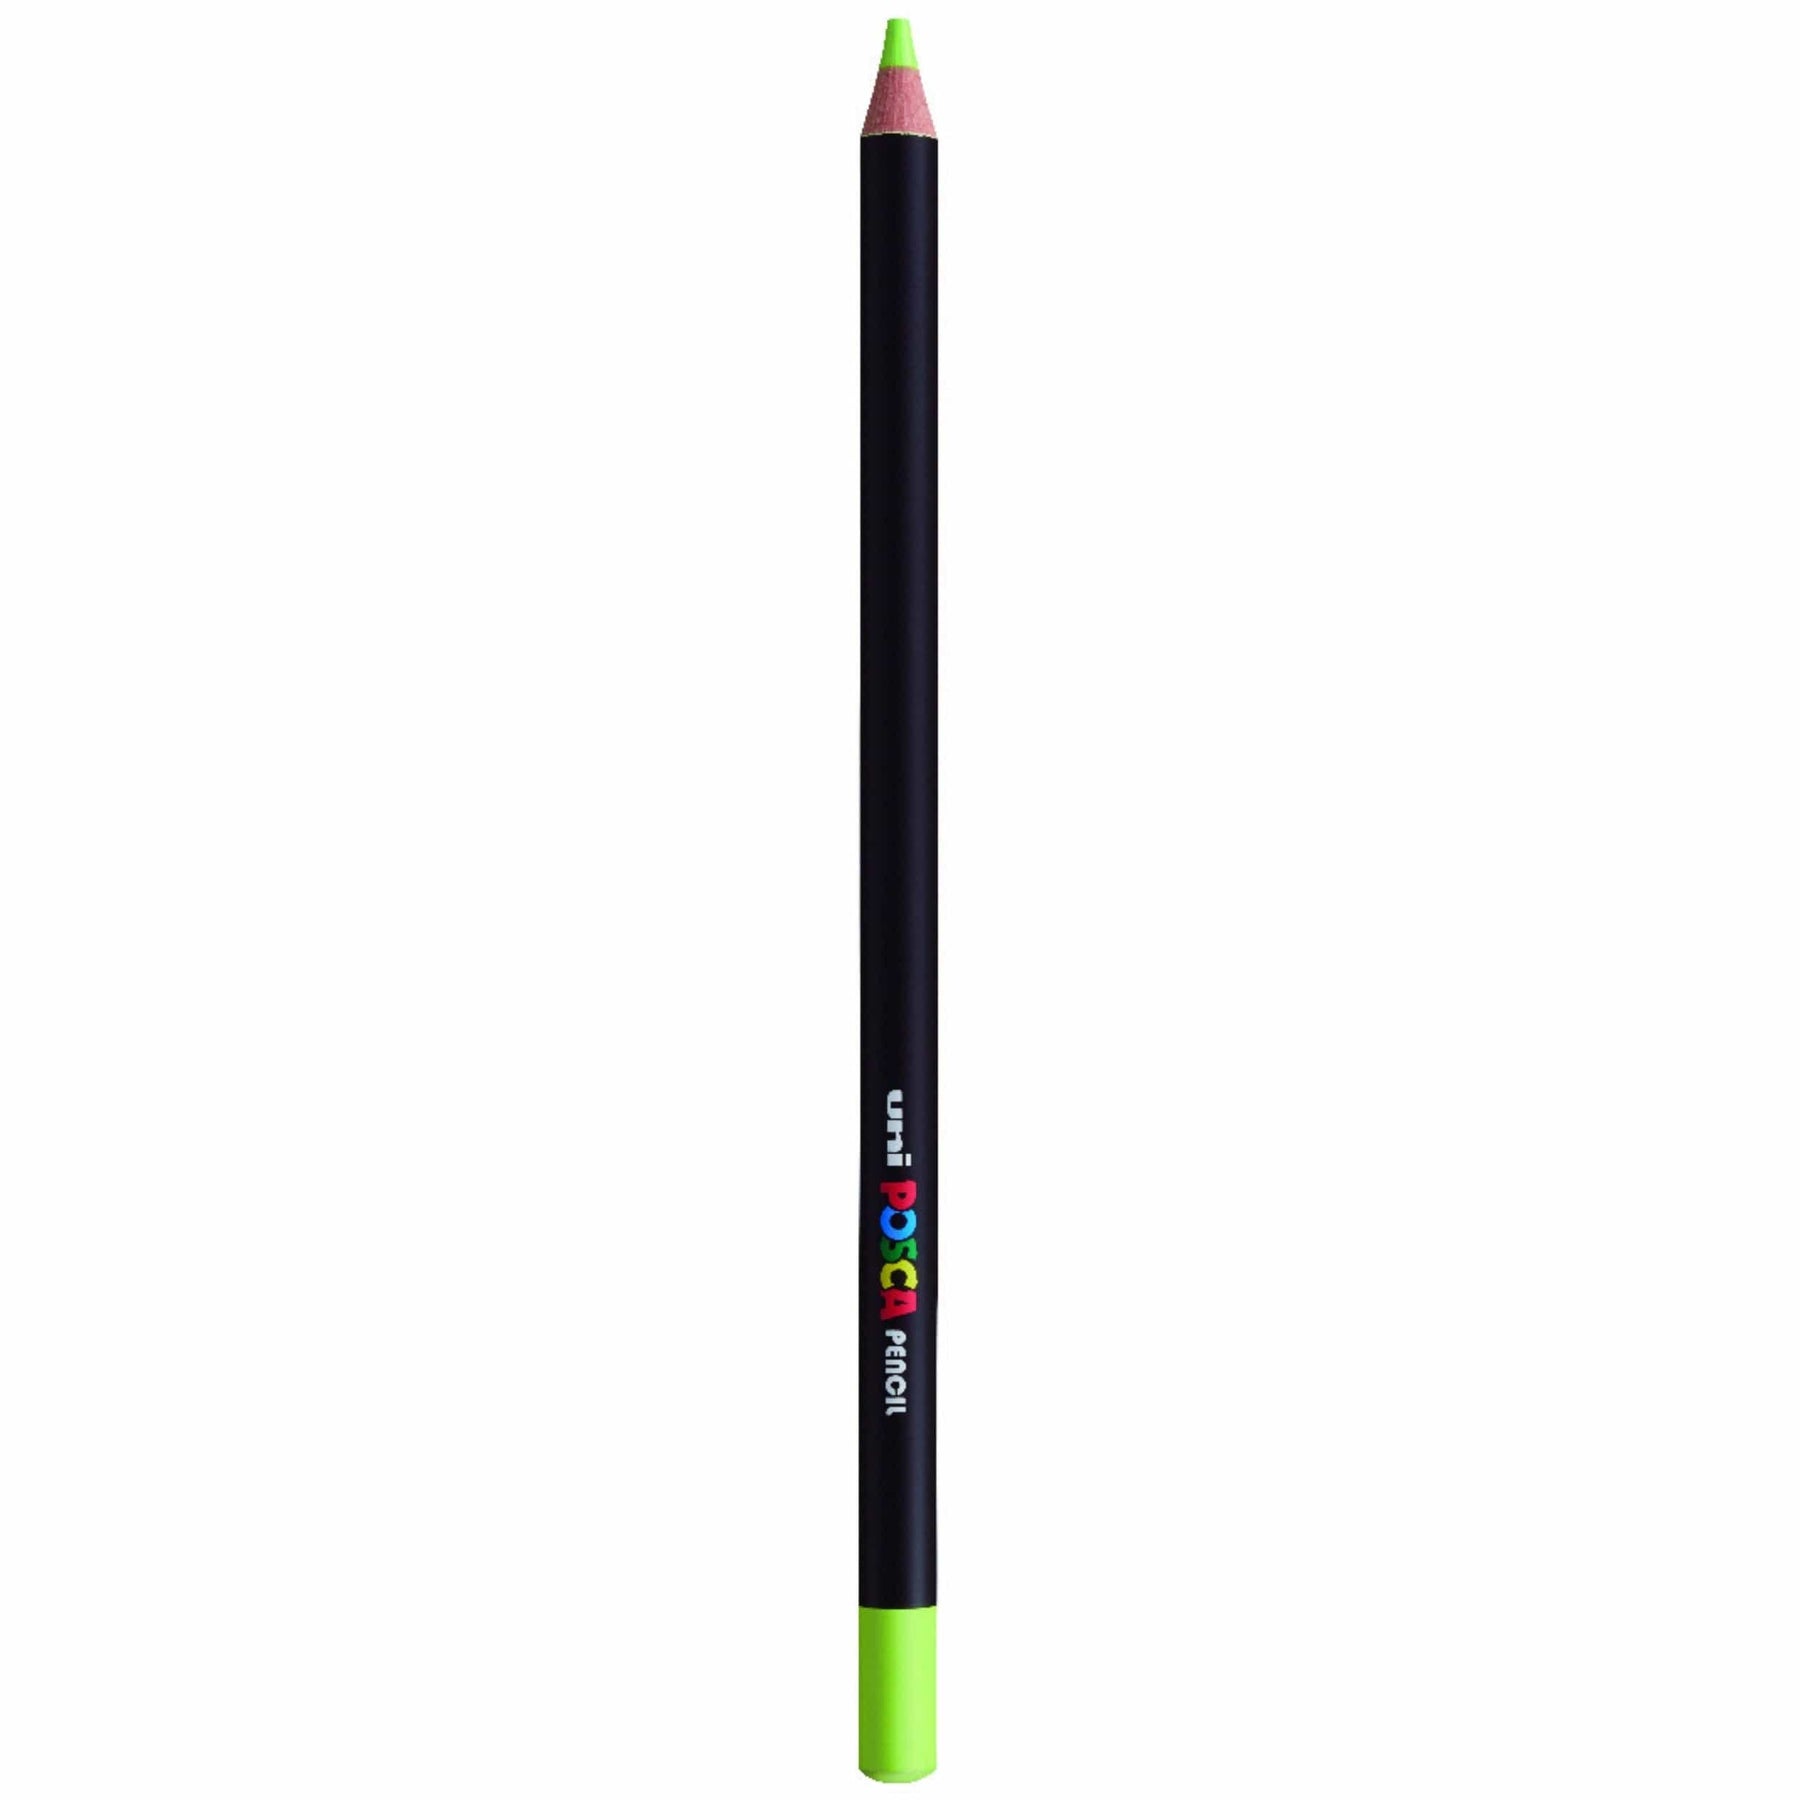 Posca Colored Pencil - Black